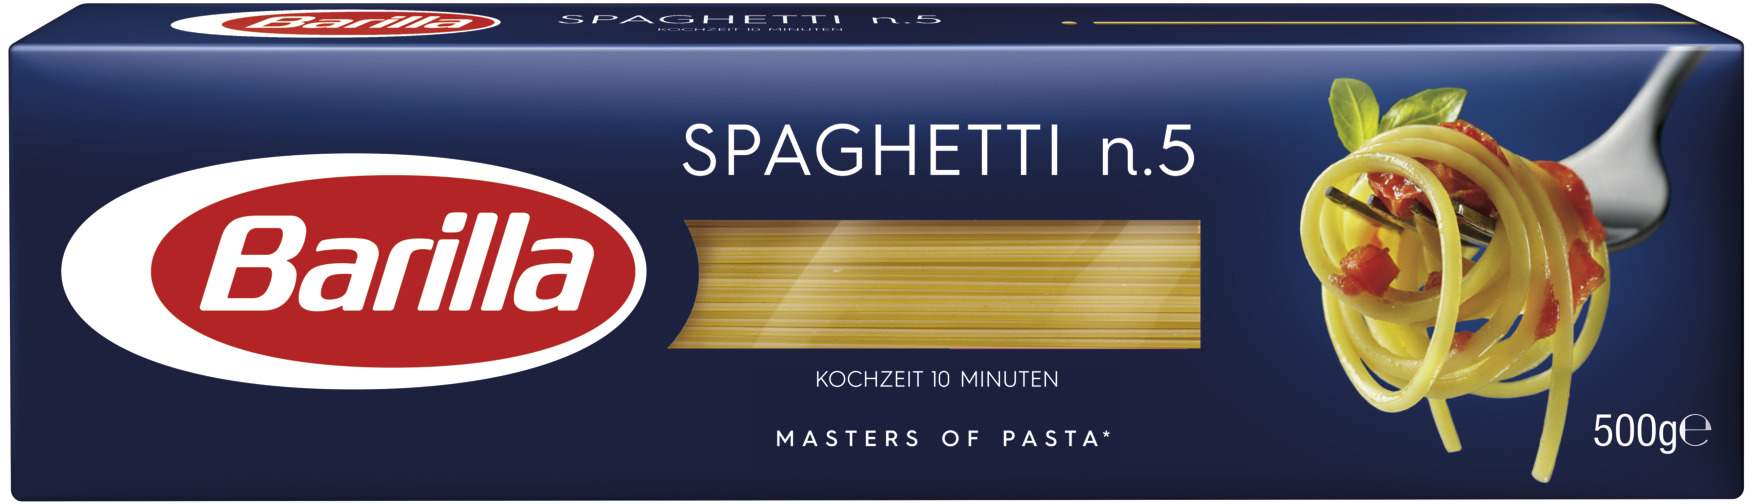 Barilla - Spaghetti Nr. 5 500g